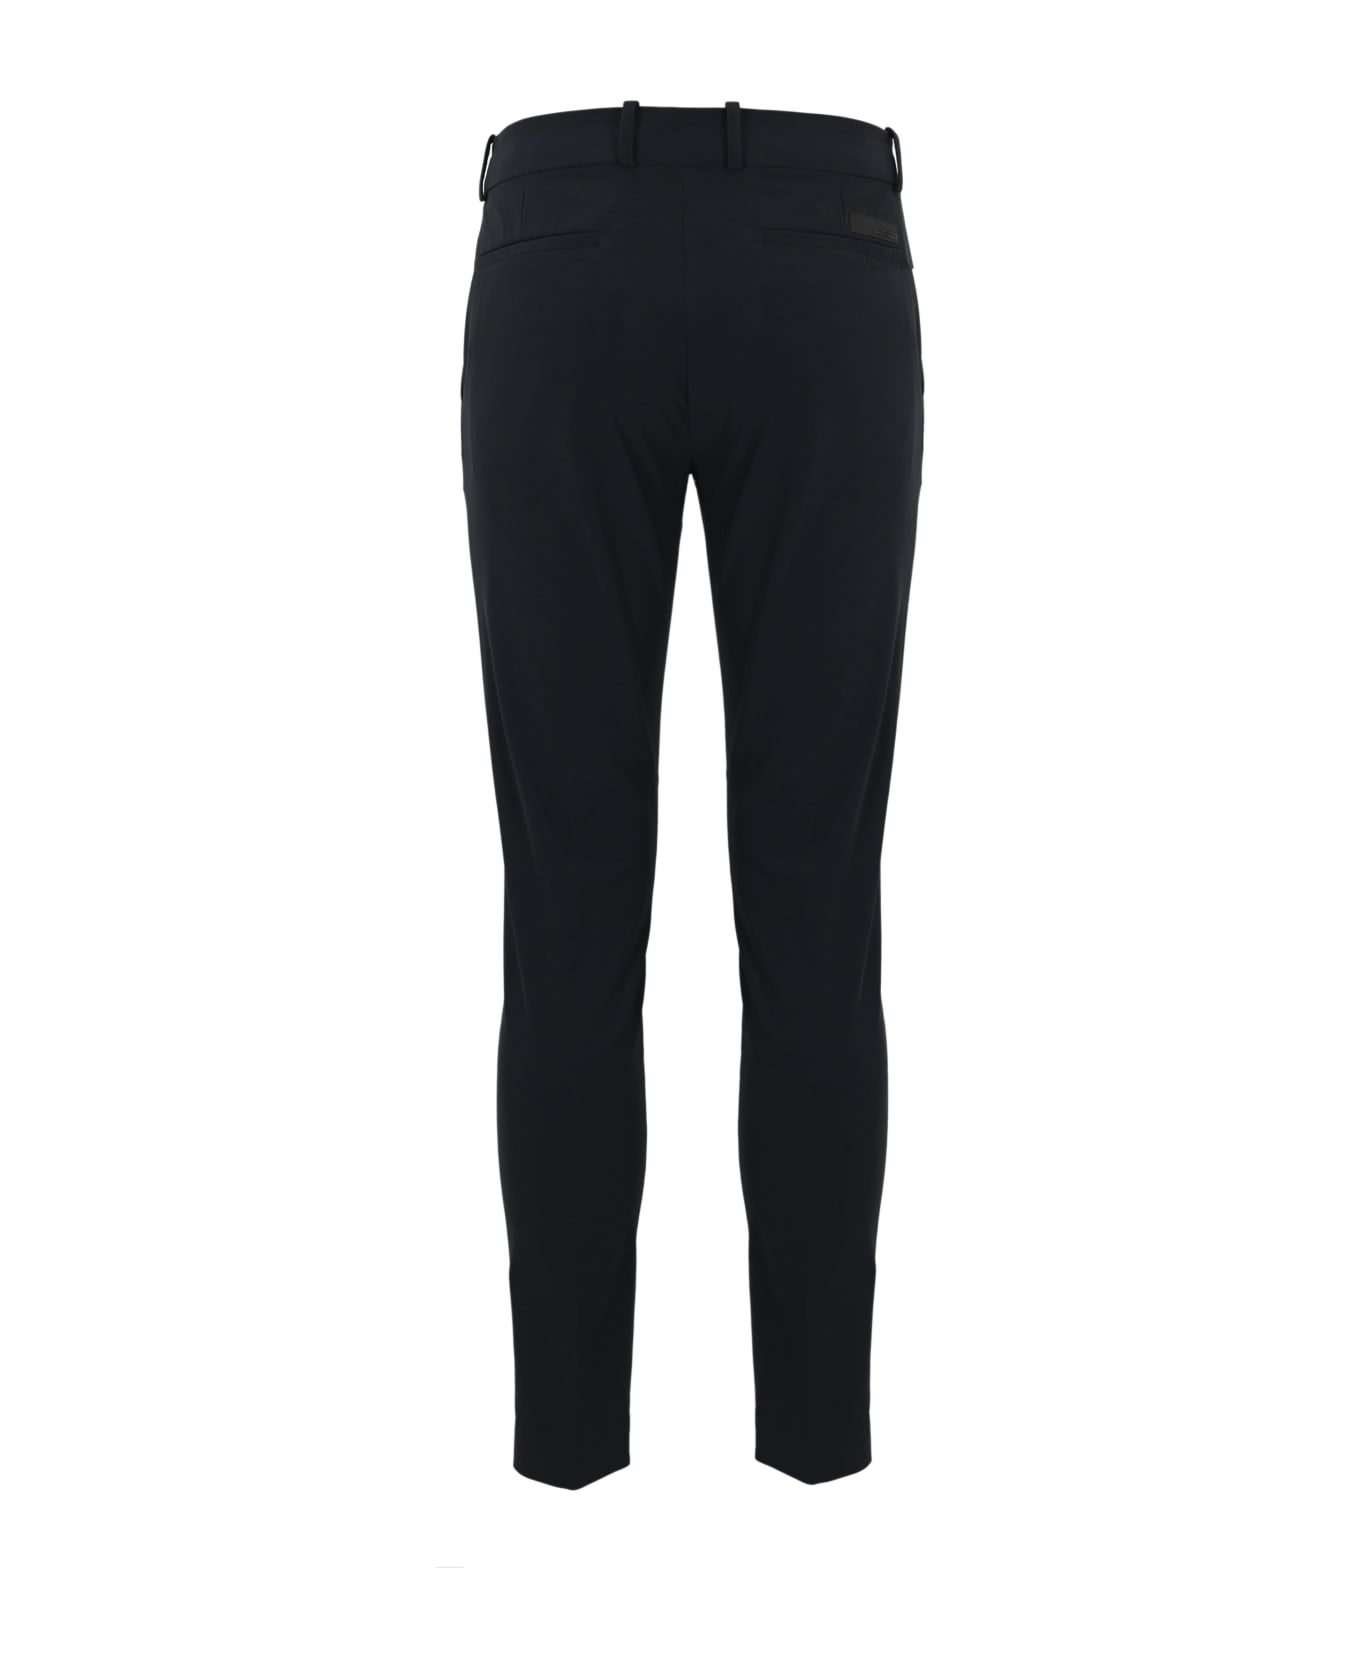 RRD - Roberto Ricci Design Chino Trousers In Technical Fabric With Pleats - Blue black